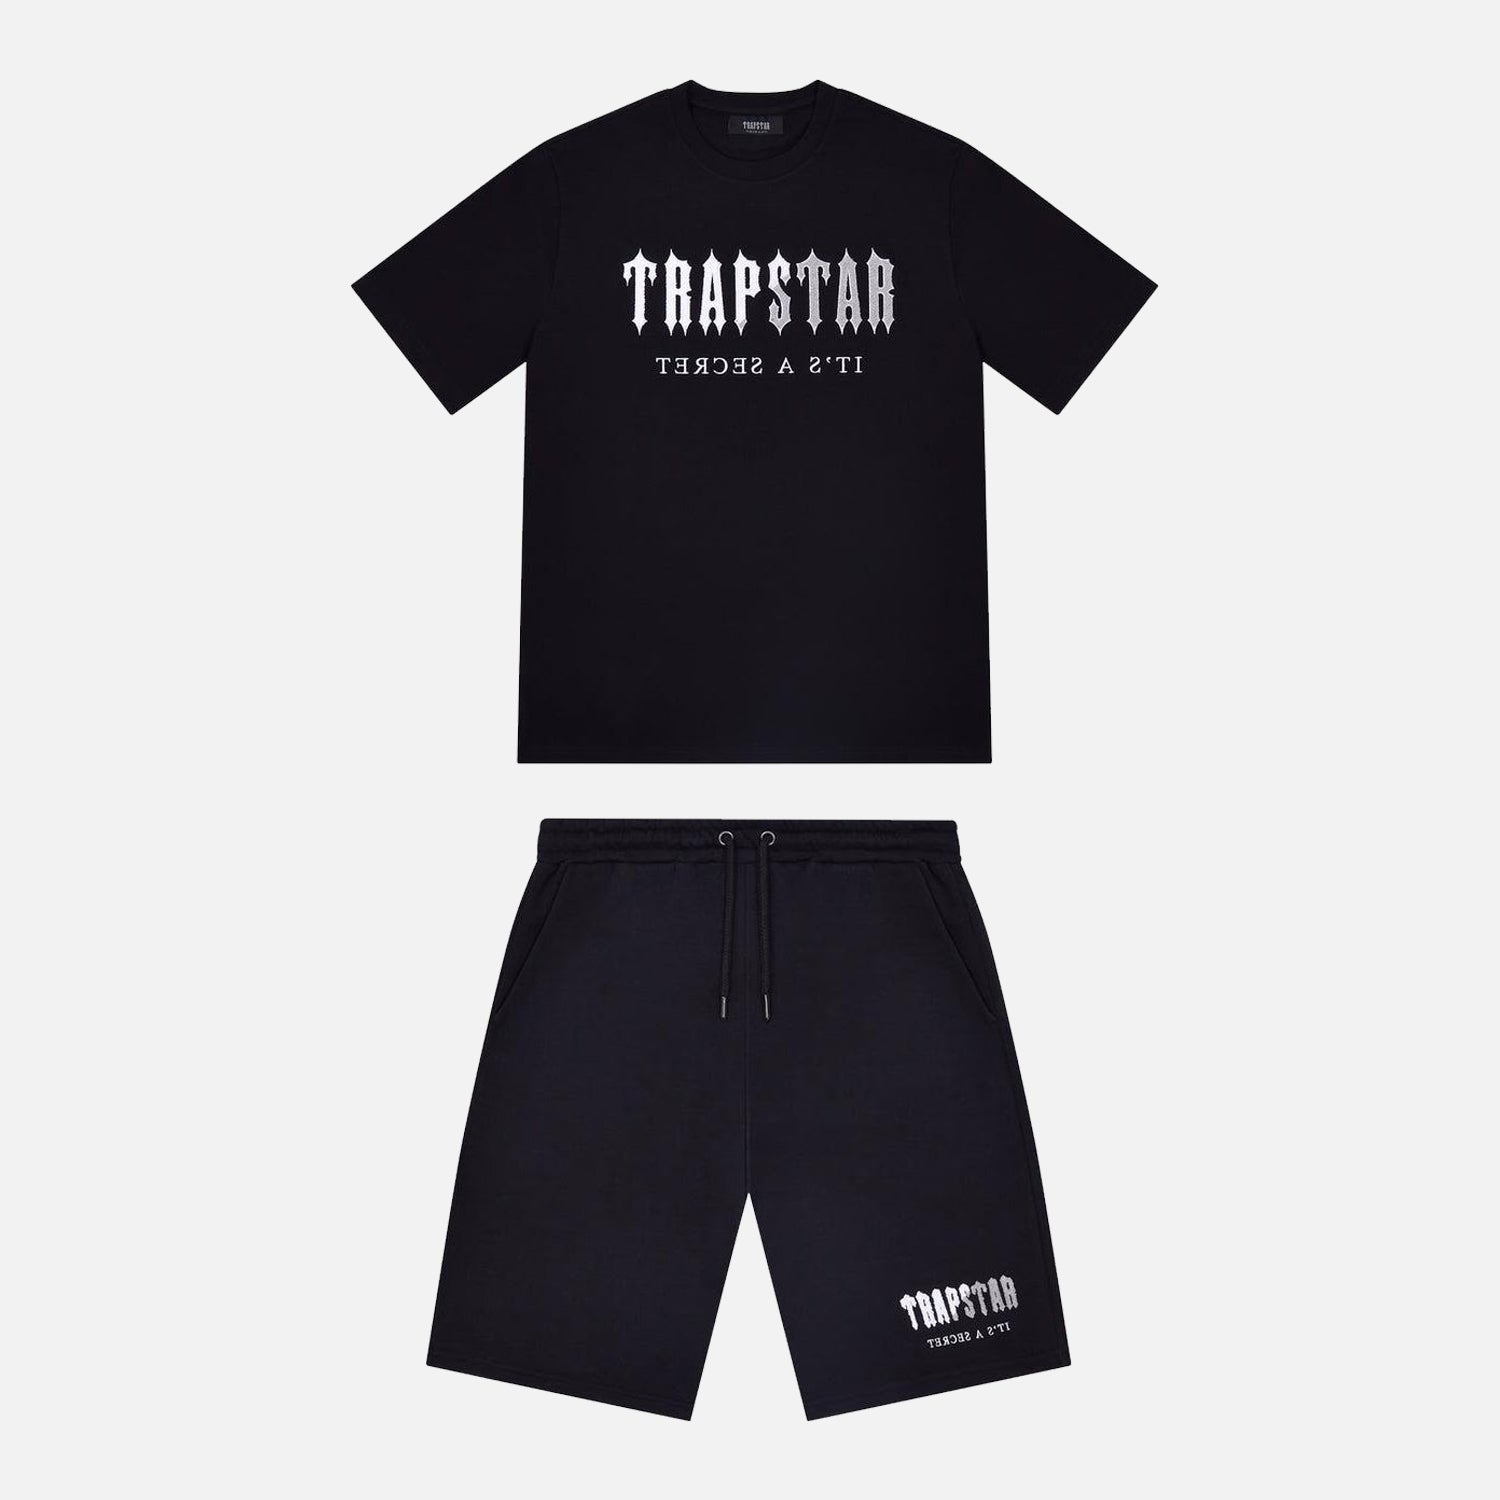 Trapstar Chenille Decoded Short Set - Black / White